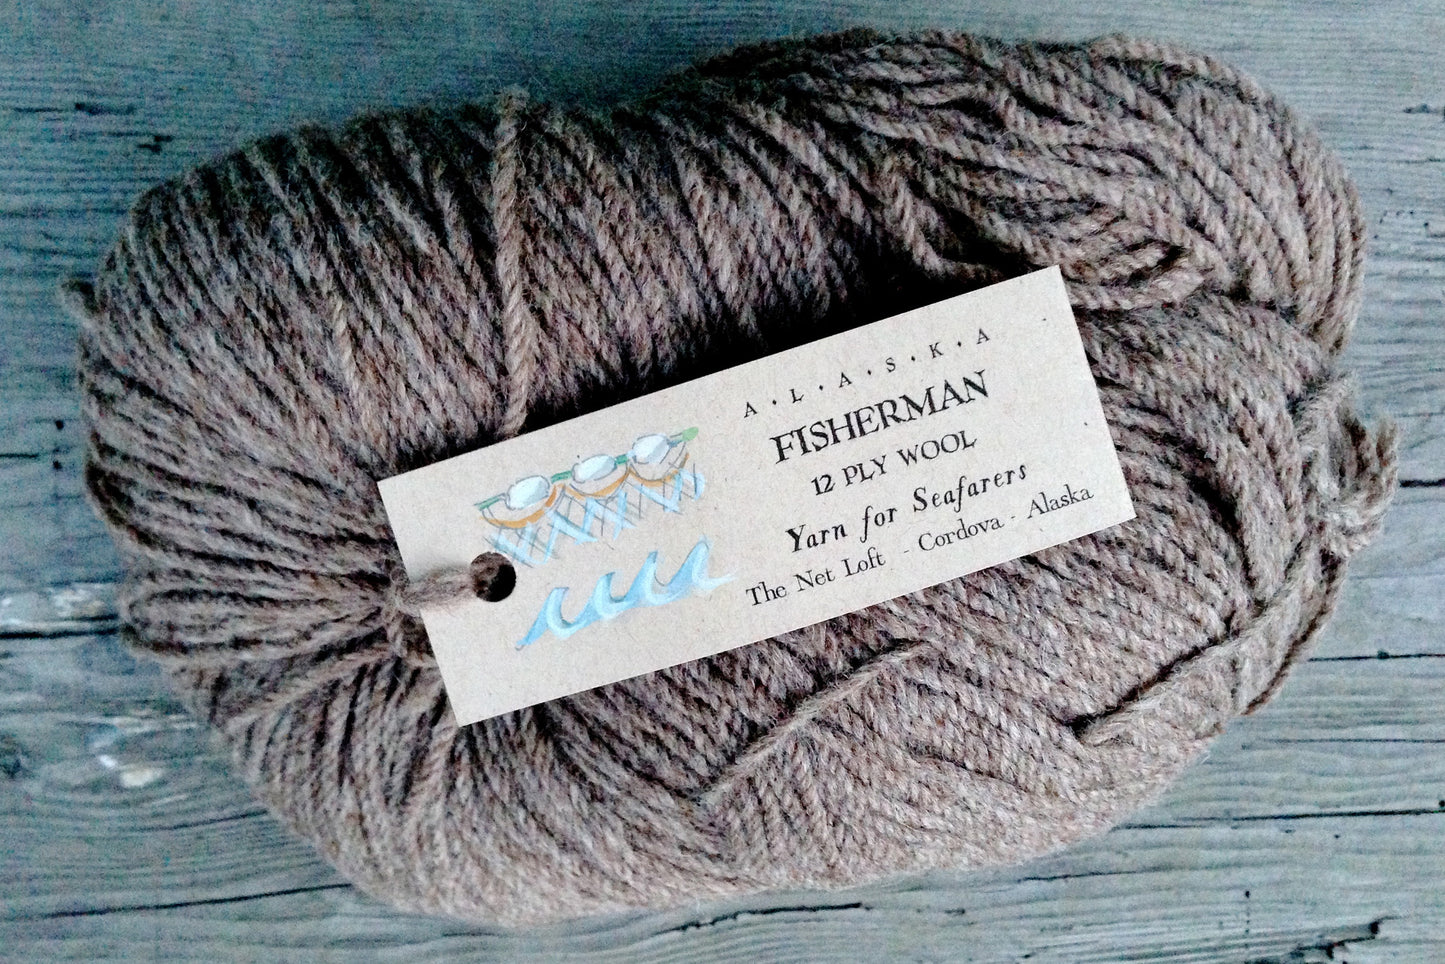 Alaska Fisherman 12 PLY Wool  - Yarn for Seafarers